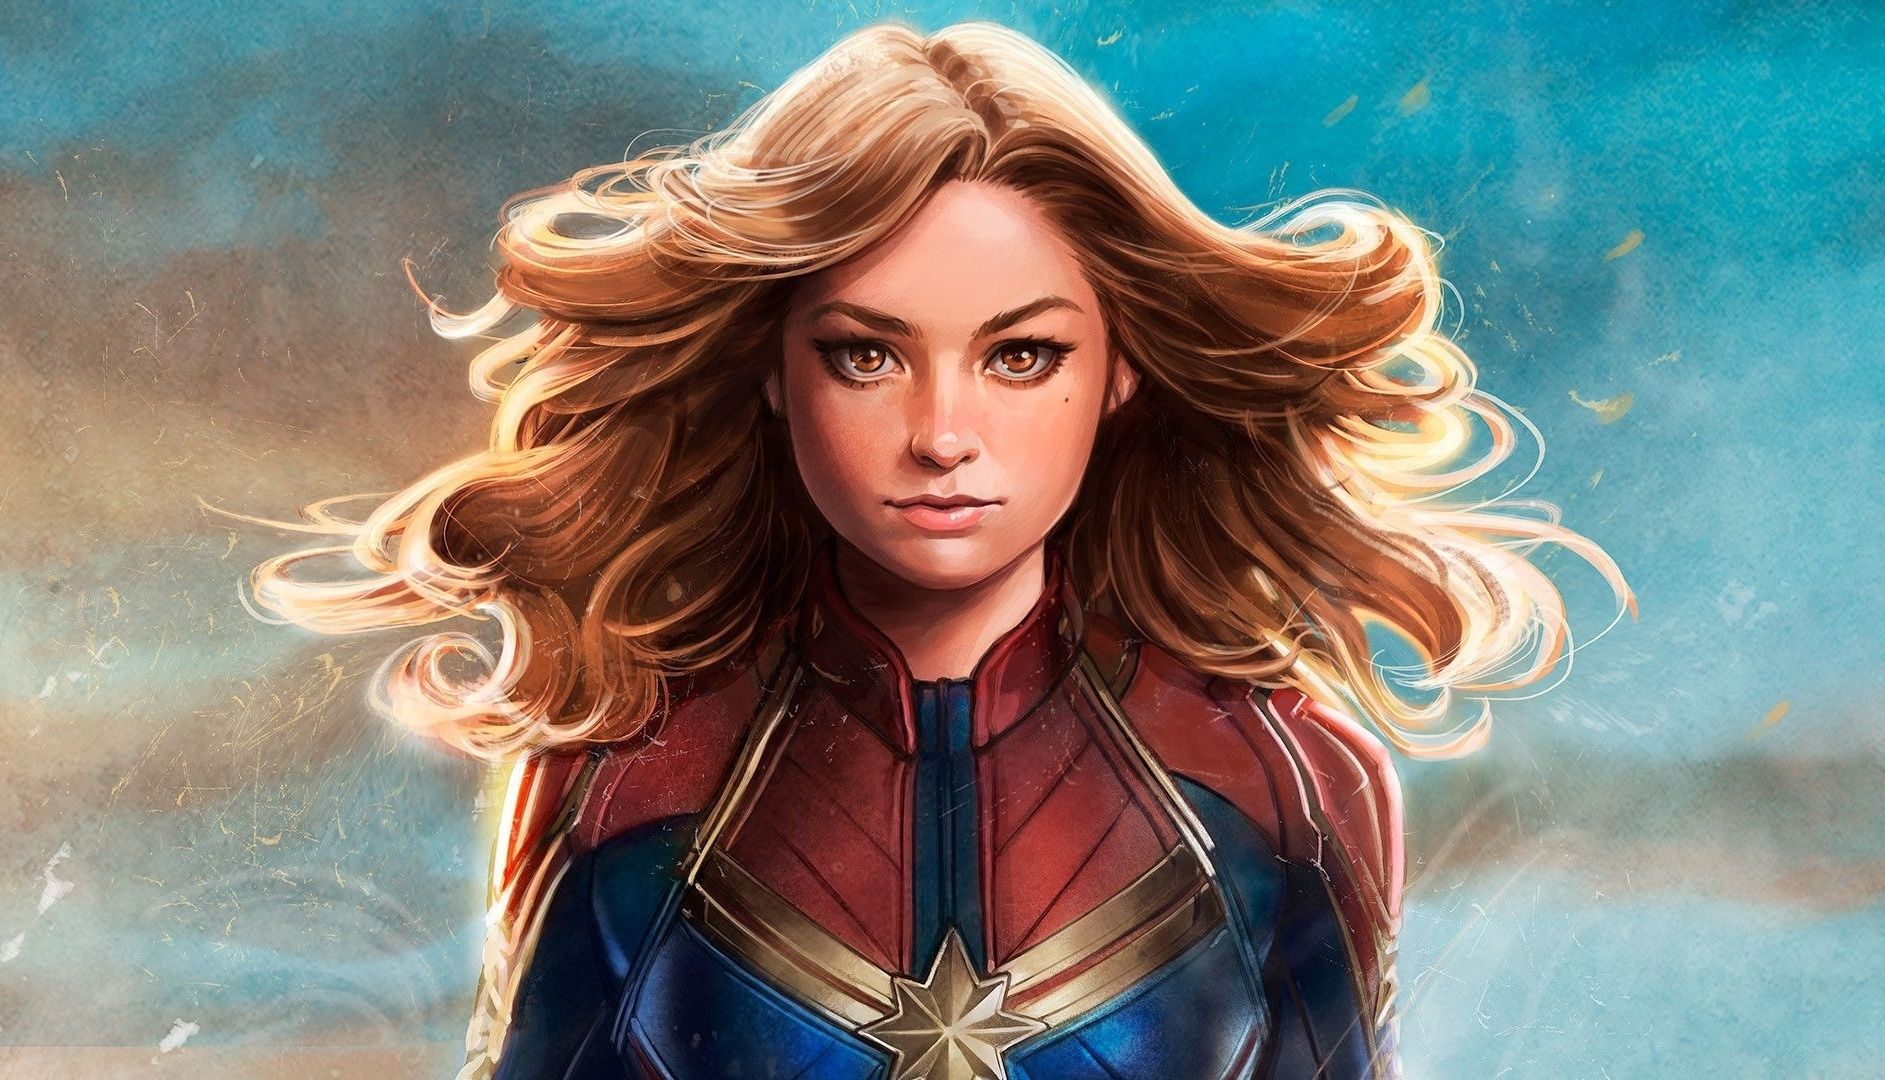 Captain marvel, girl superhero, fan art wallpaper, HD image, picture, background, e5aac1